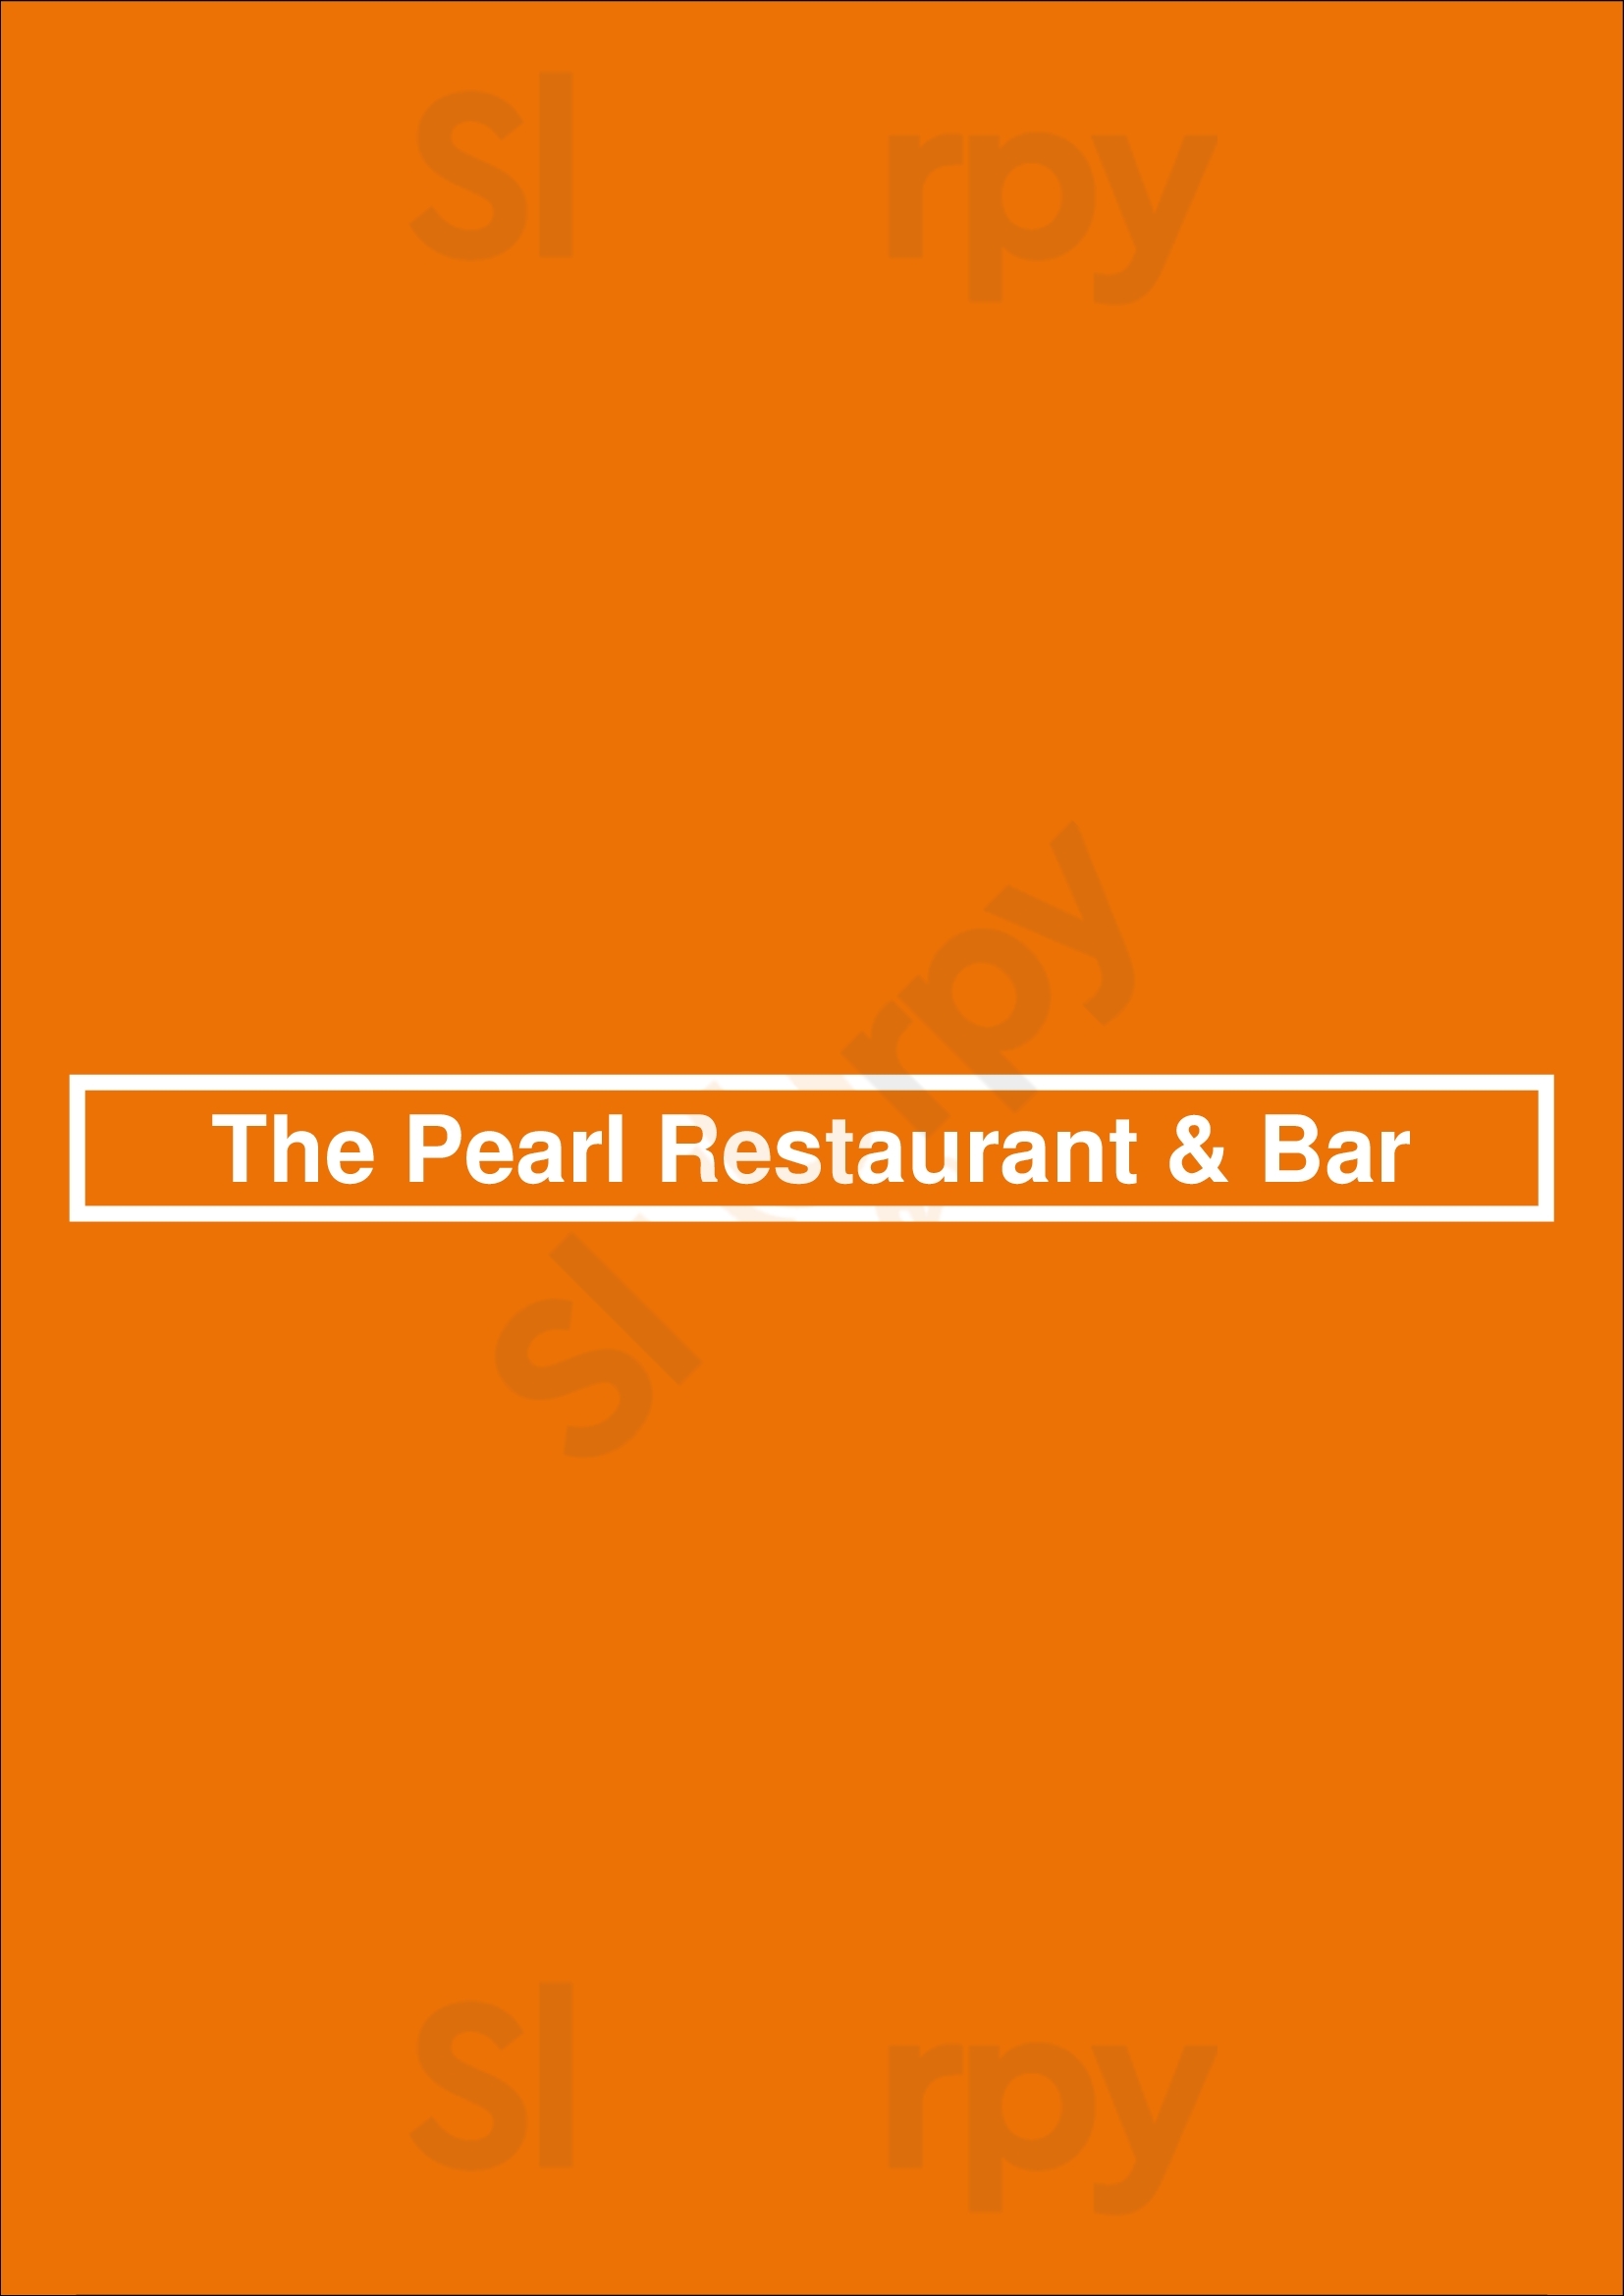 The Pearl Restaurant & Bar Houston Menu - 1